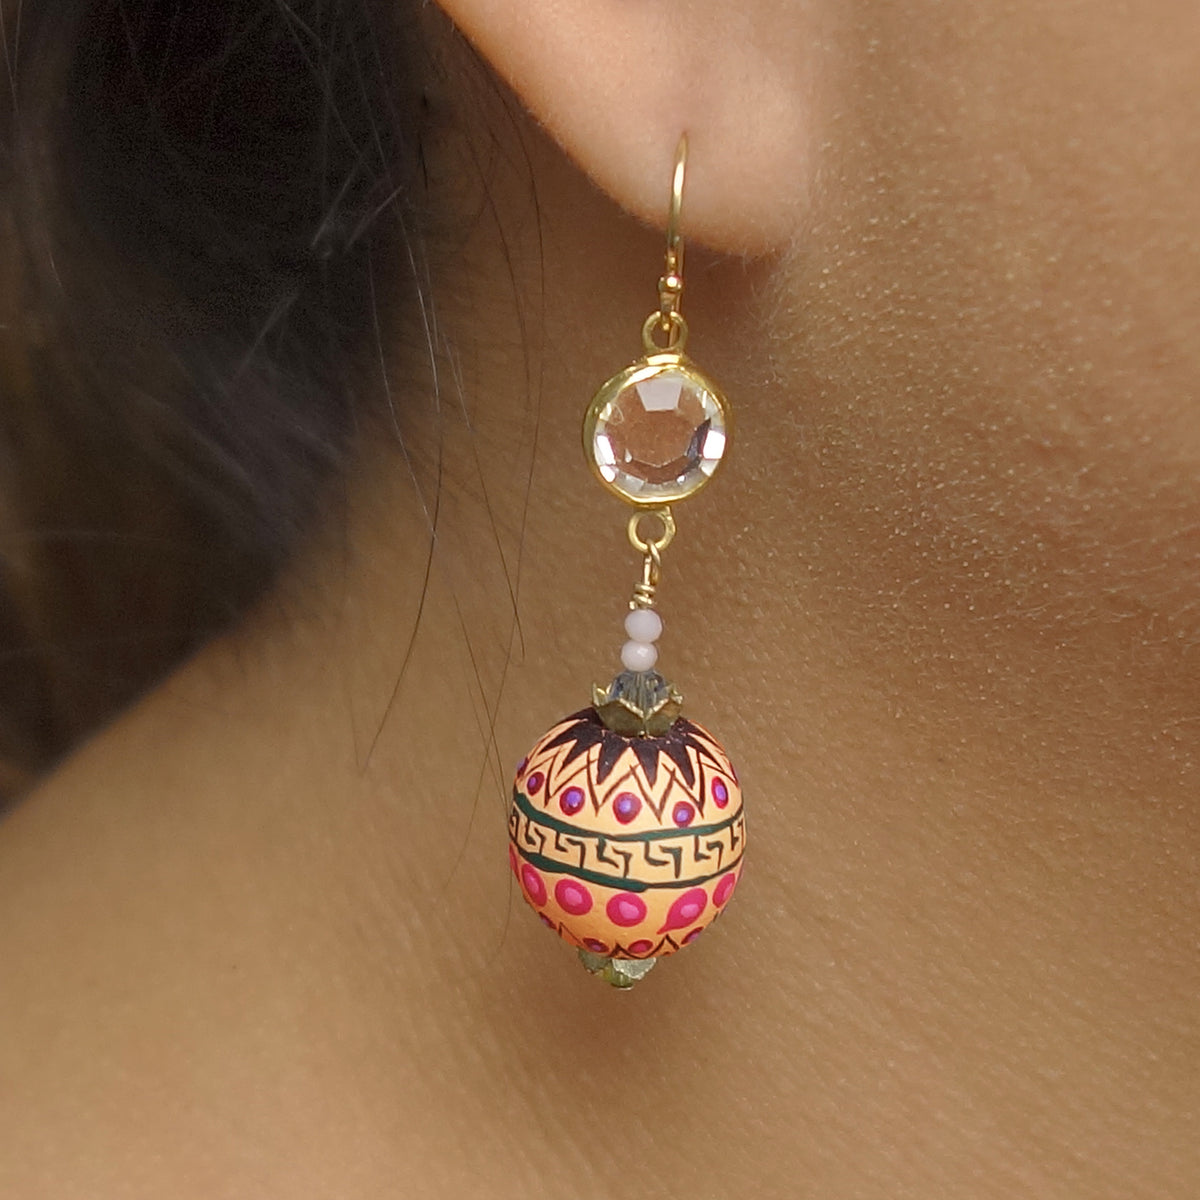 Dios Mio gemstone earrings